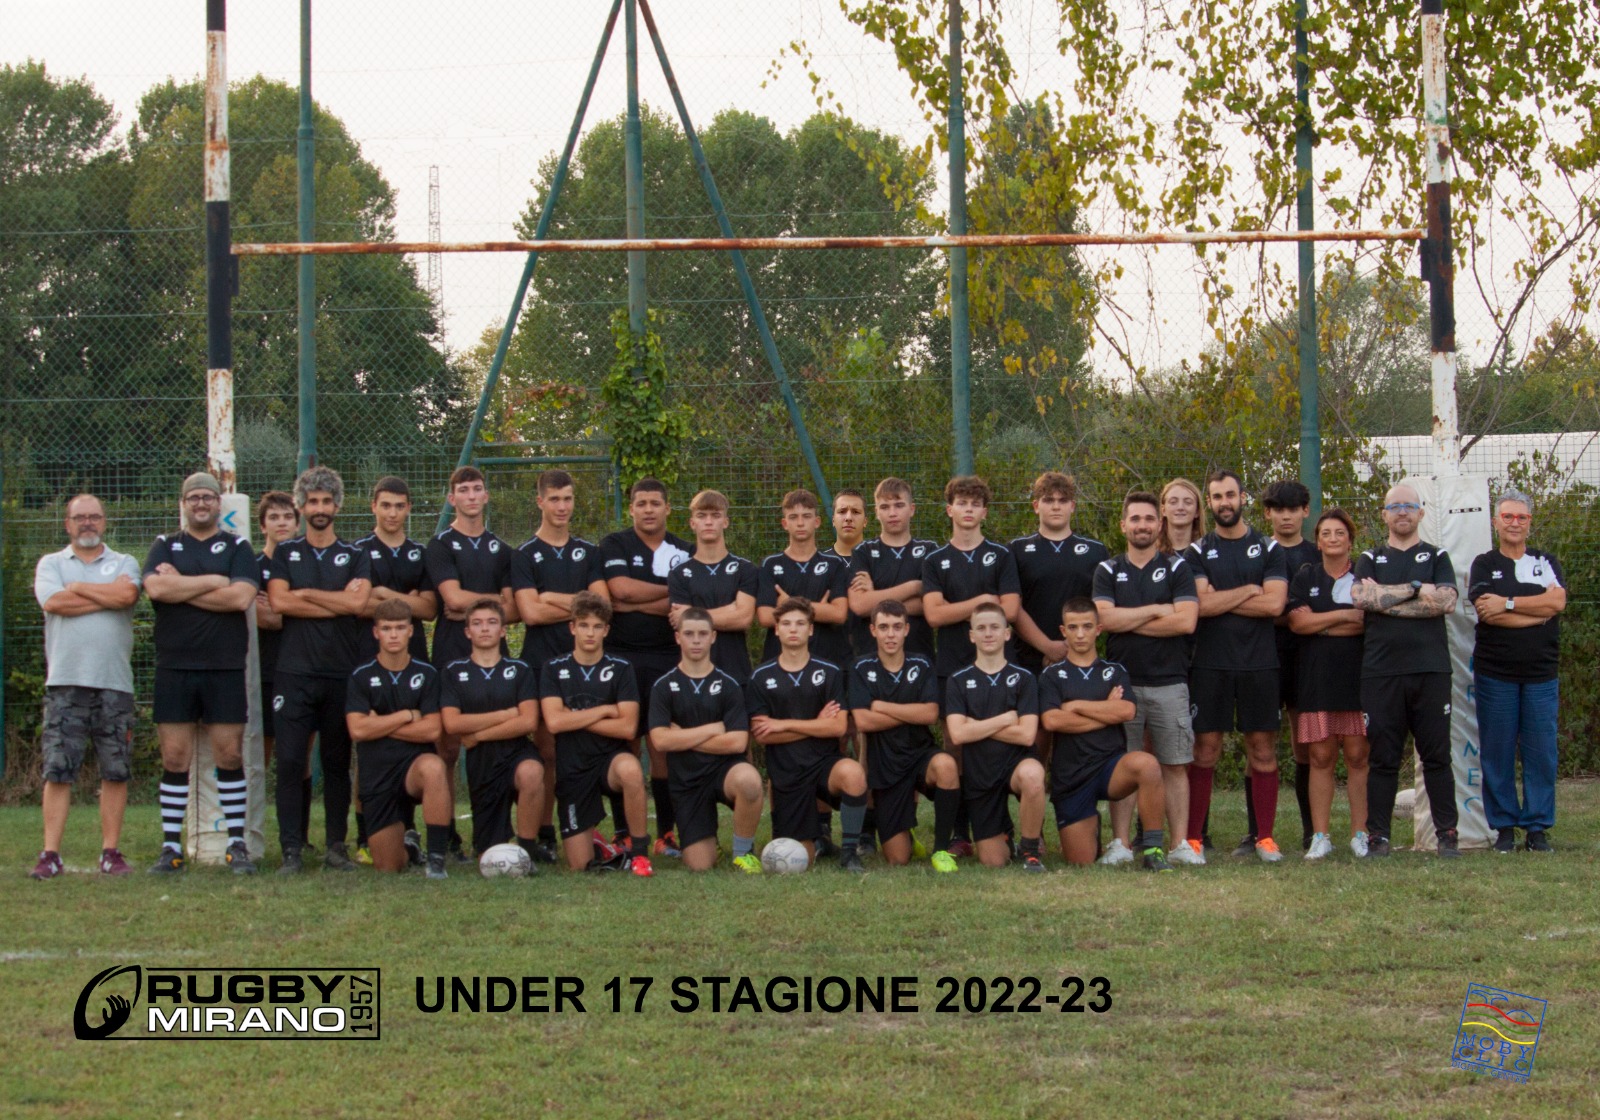 Rugby Mirano 1957 ASD - Under 17 2022/23